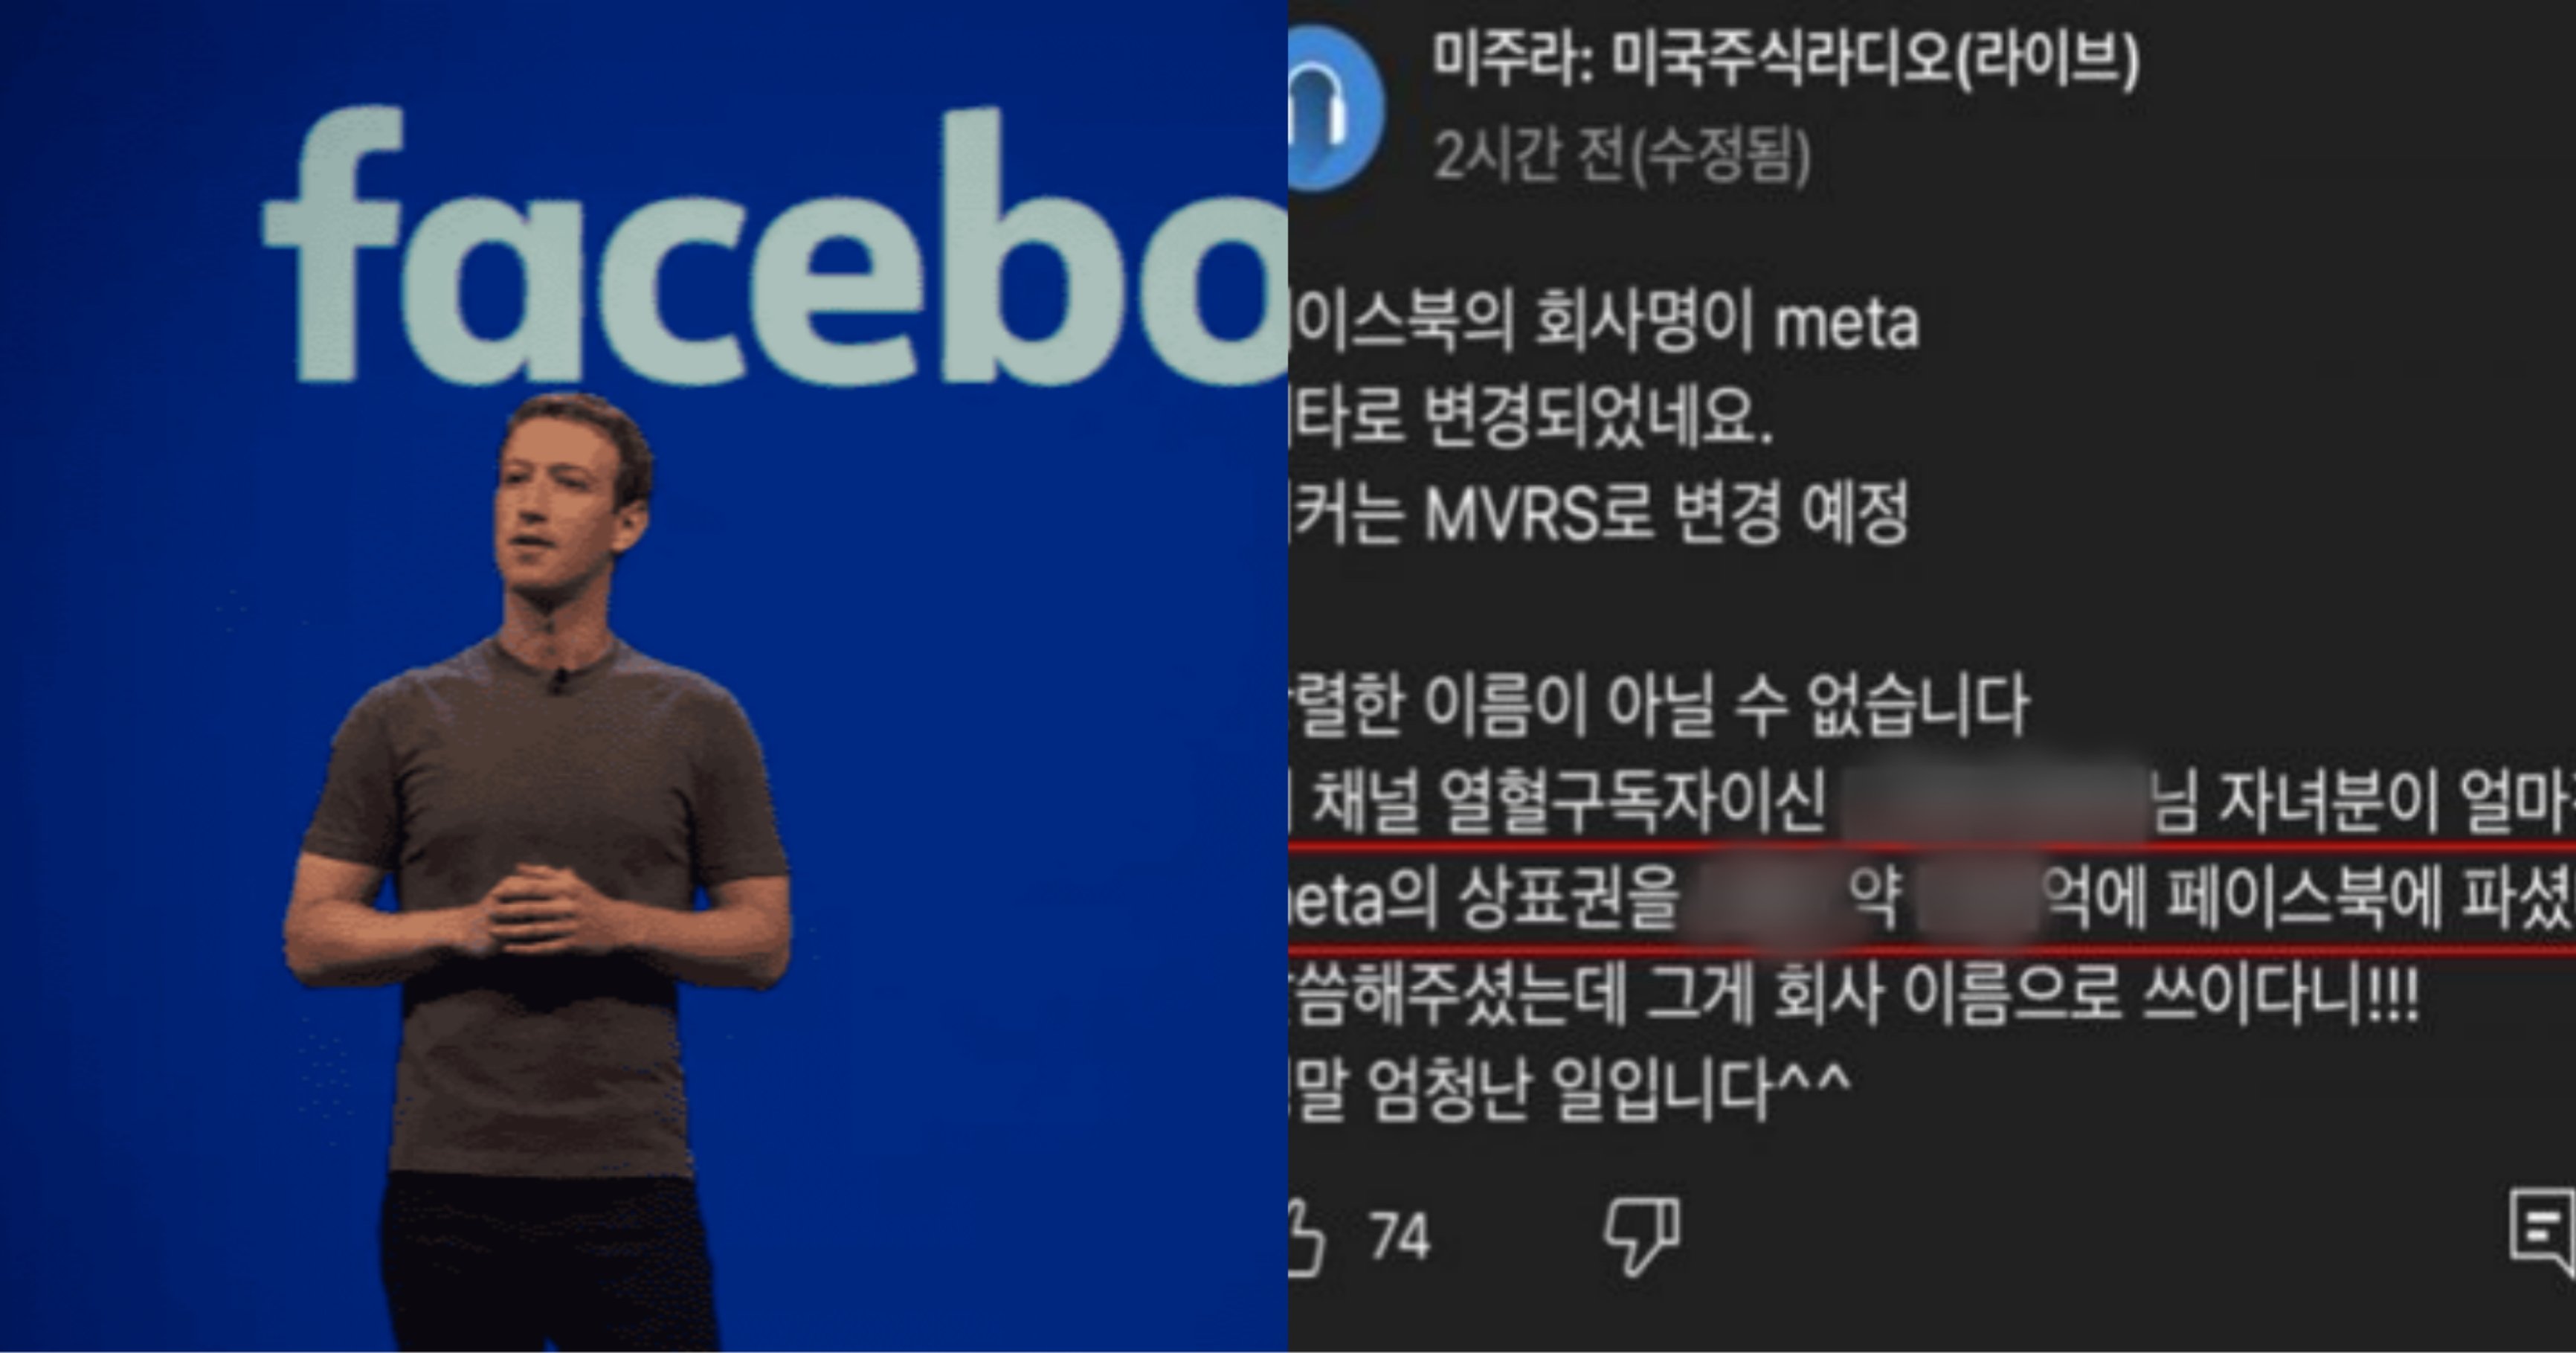 kakaotalk 20211029 193251227.jpg?resize=412,232 - 페이스북의 새로운 회사명인 '메타' 상표권을 갖고 있던 한국인이 받은 '엄청난' 금액